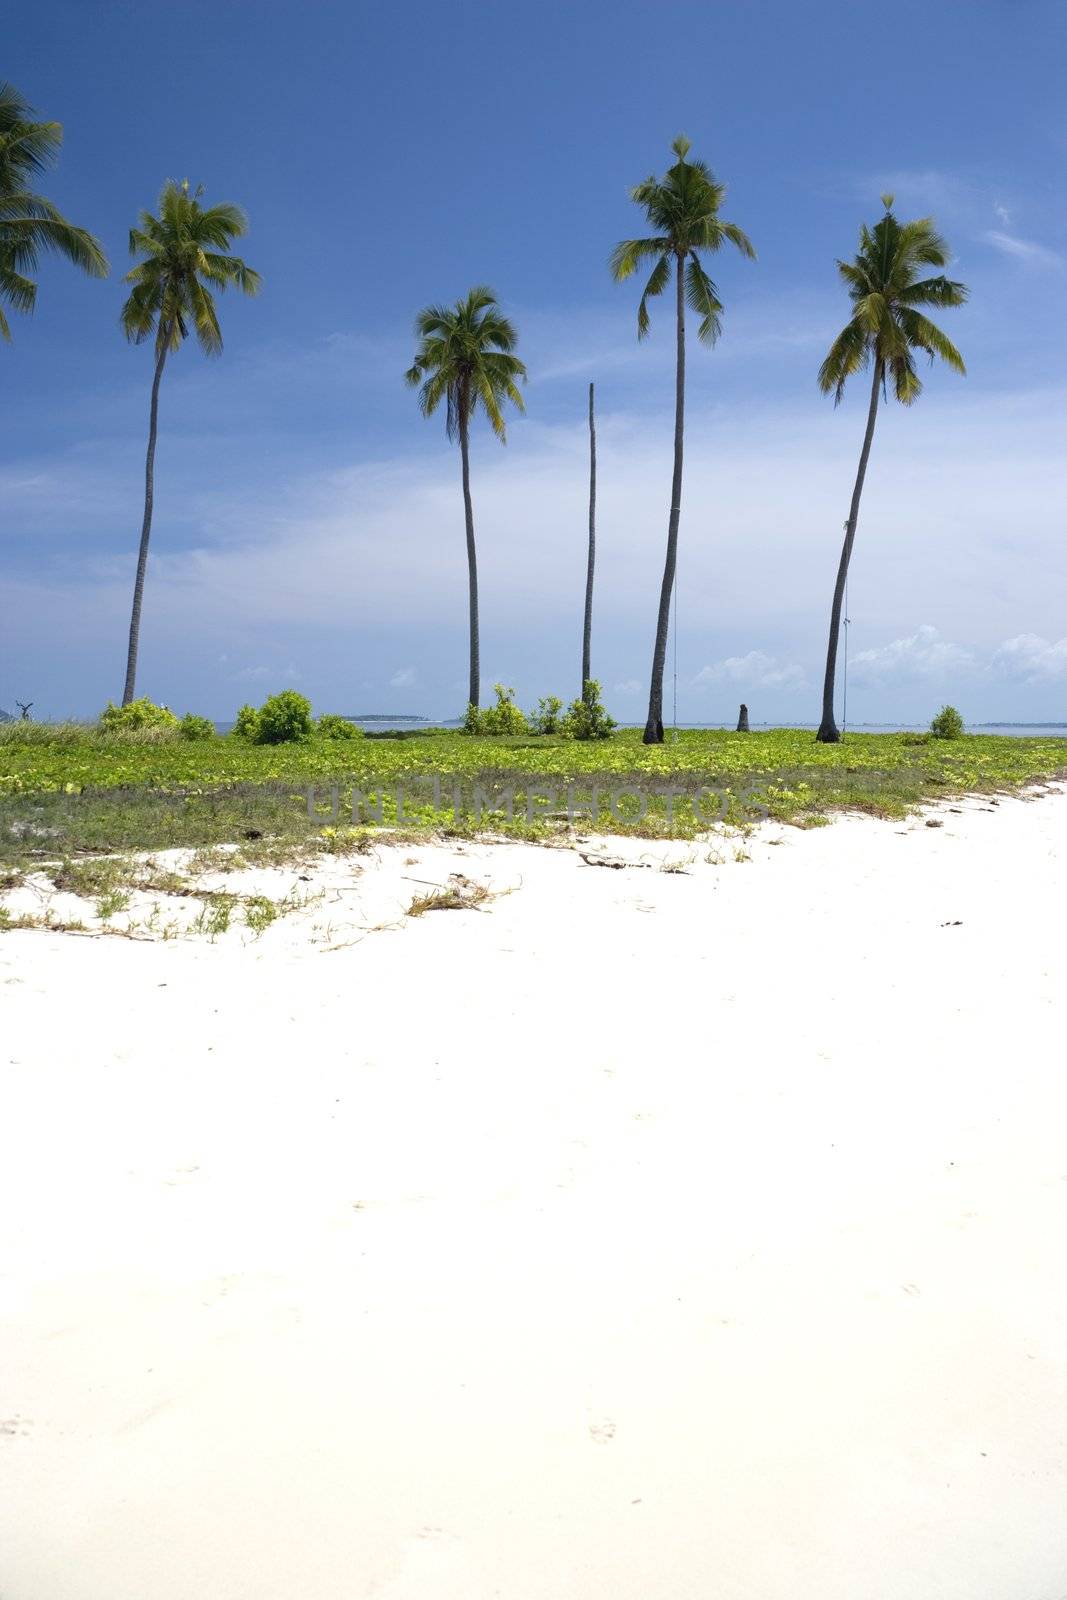 Island Coconut Trees by shariffc